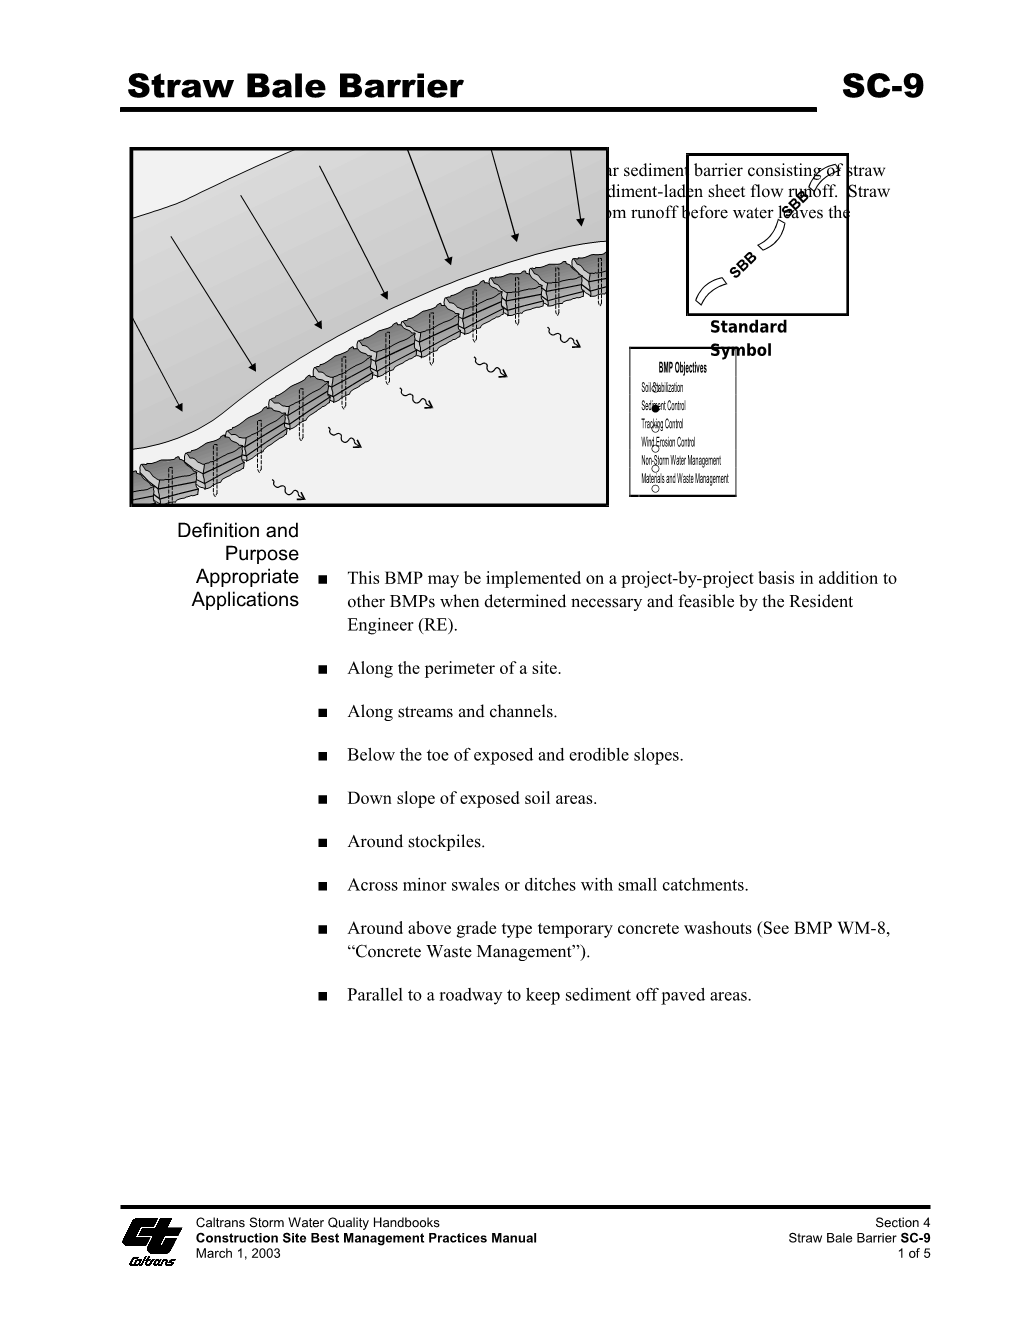 Construction Site Best Management Practices Manual Straw Bale Barrier SC-9